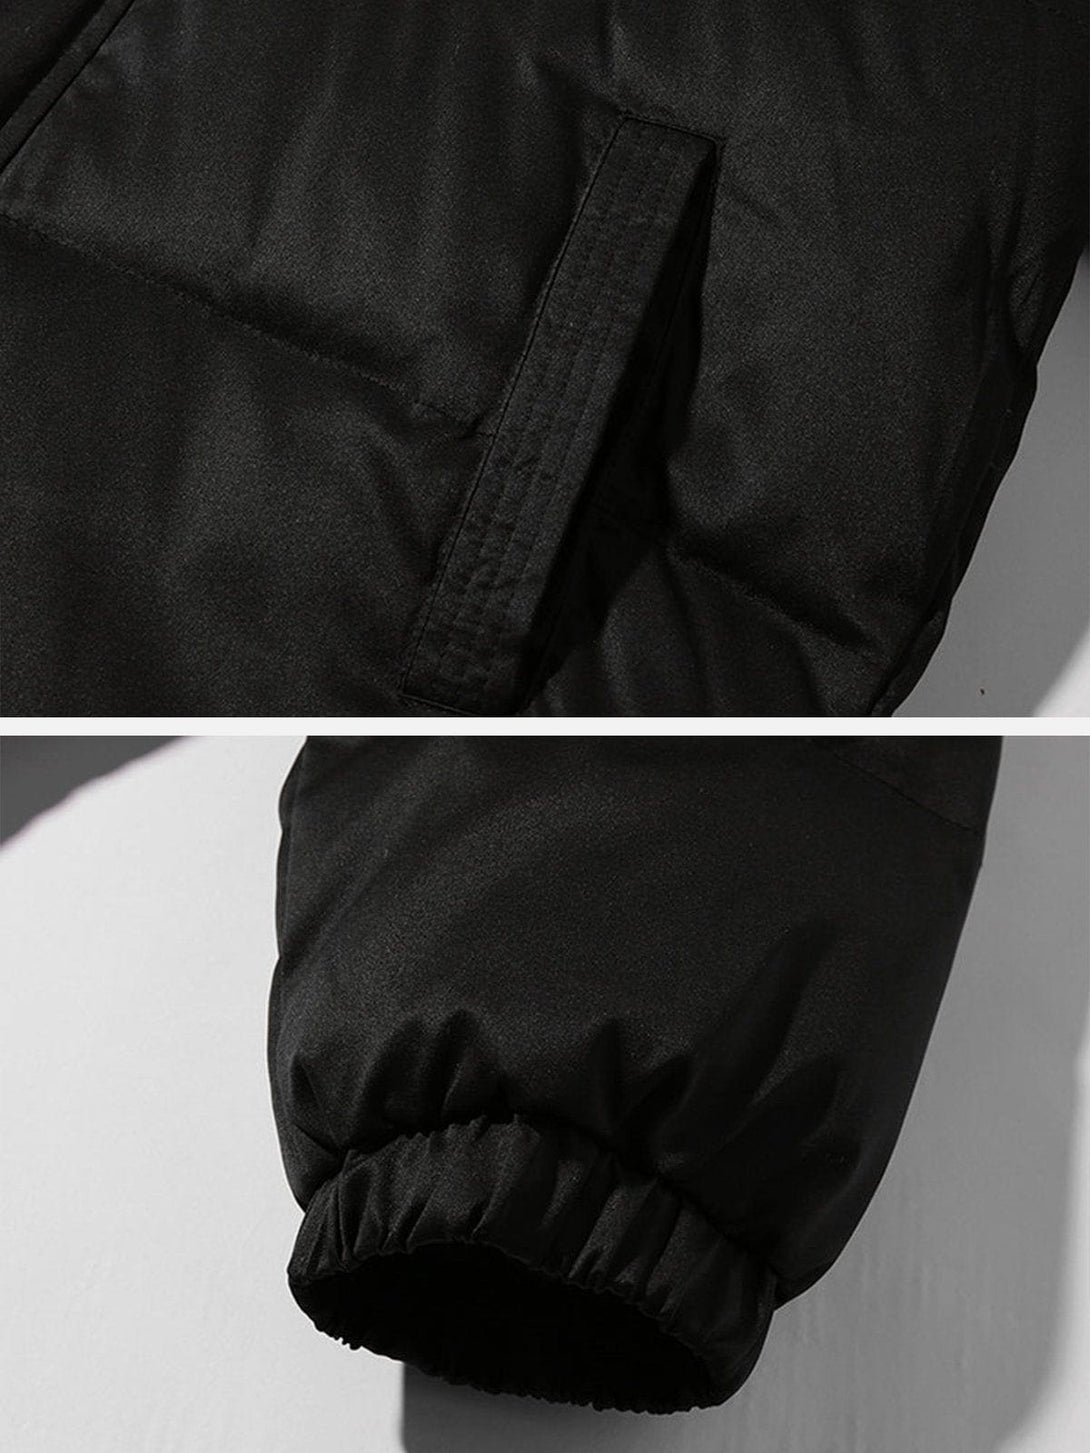 Majesda® - Simple Earth Print Winter Coat outfit ideas streetwear fashion